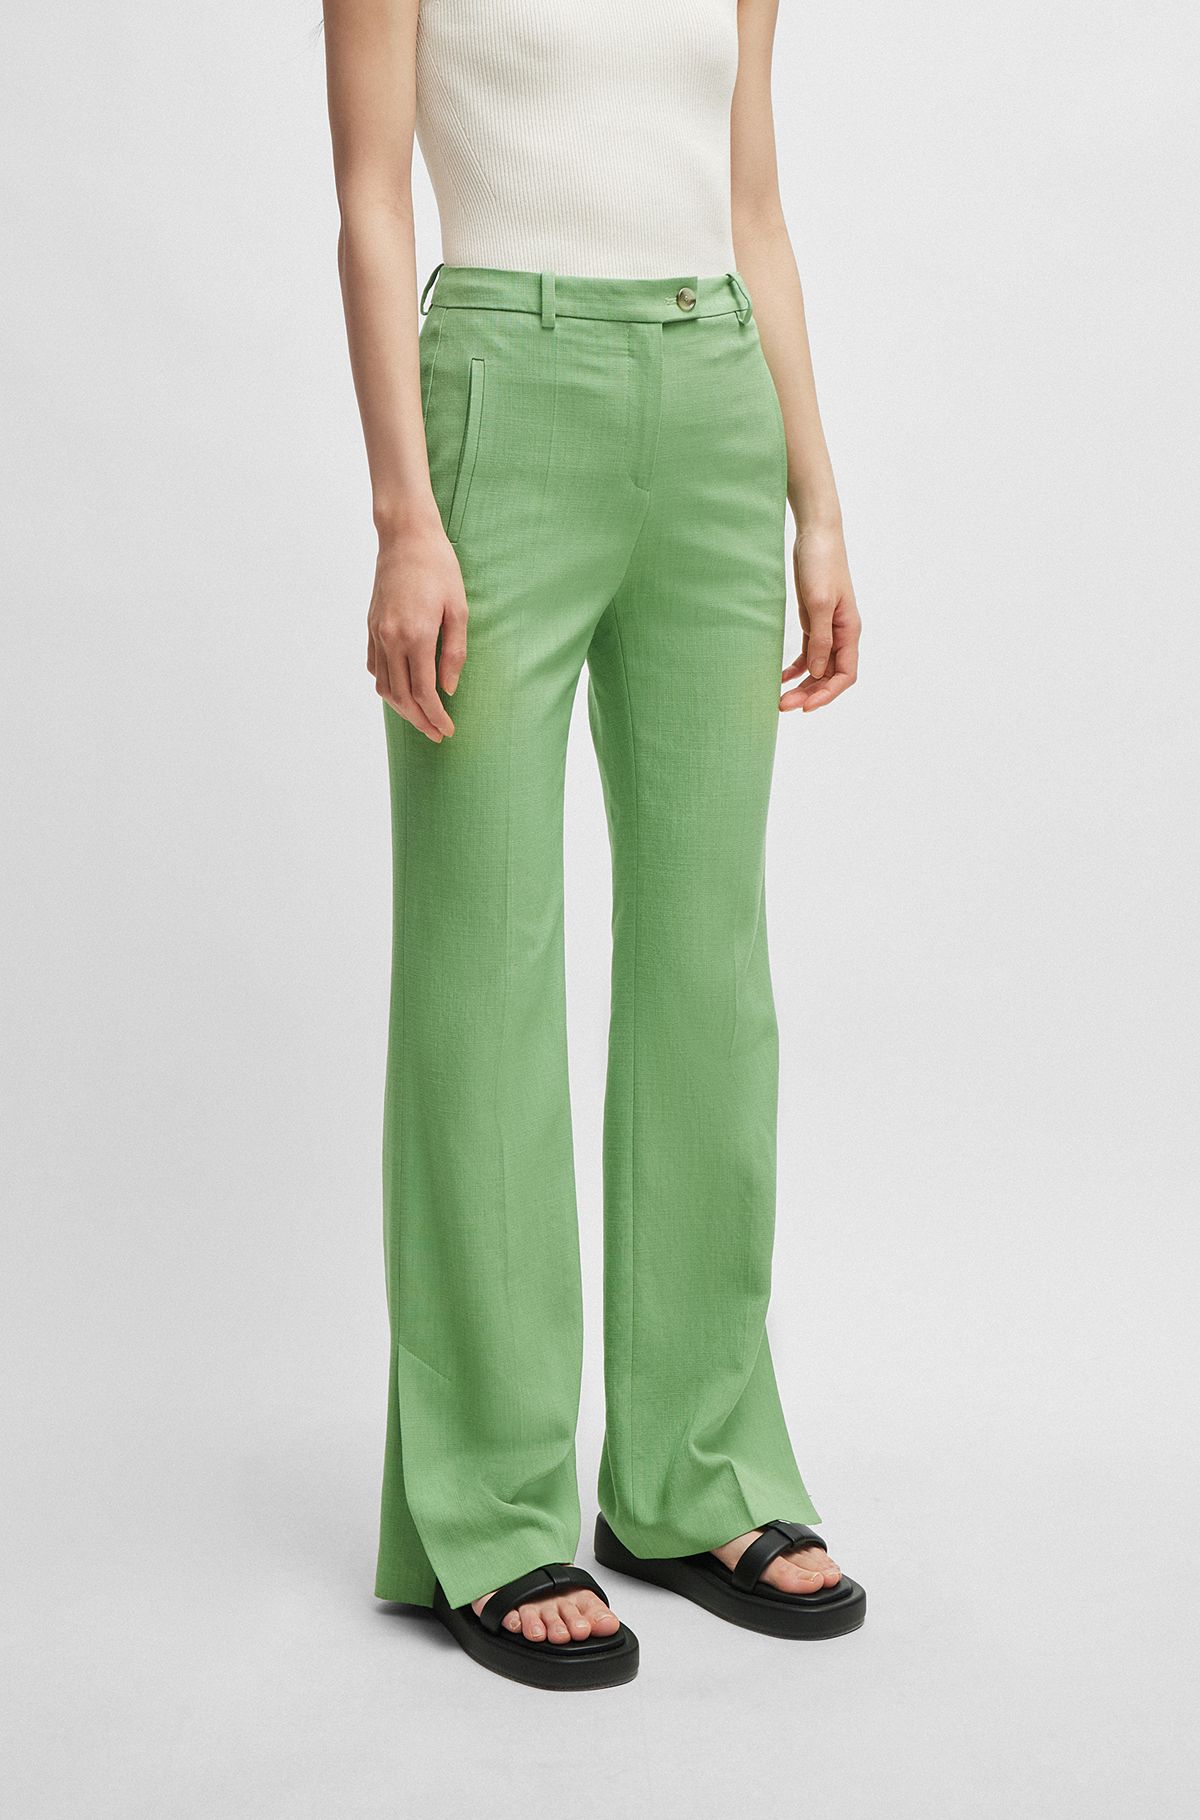 Wide fit mintgreen pants